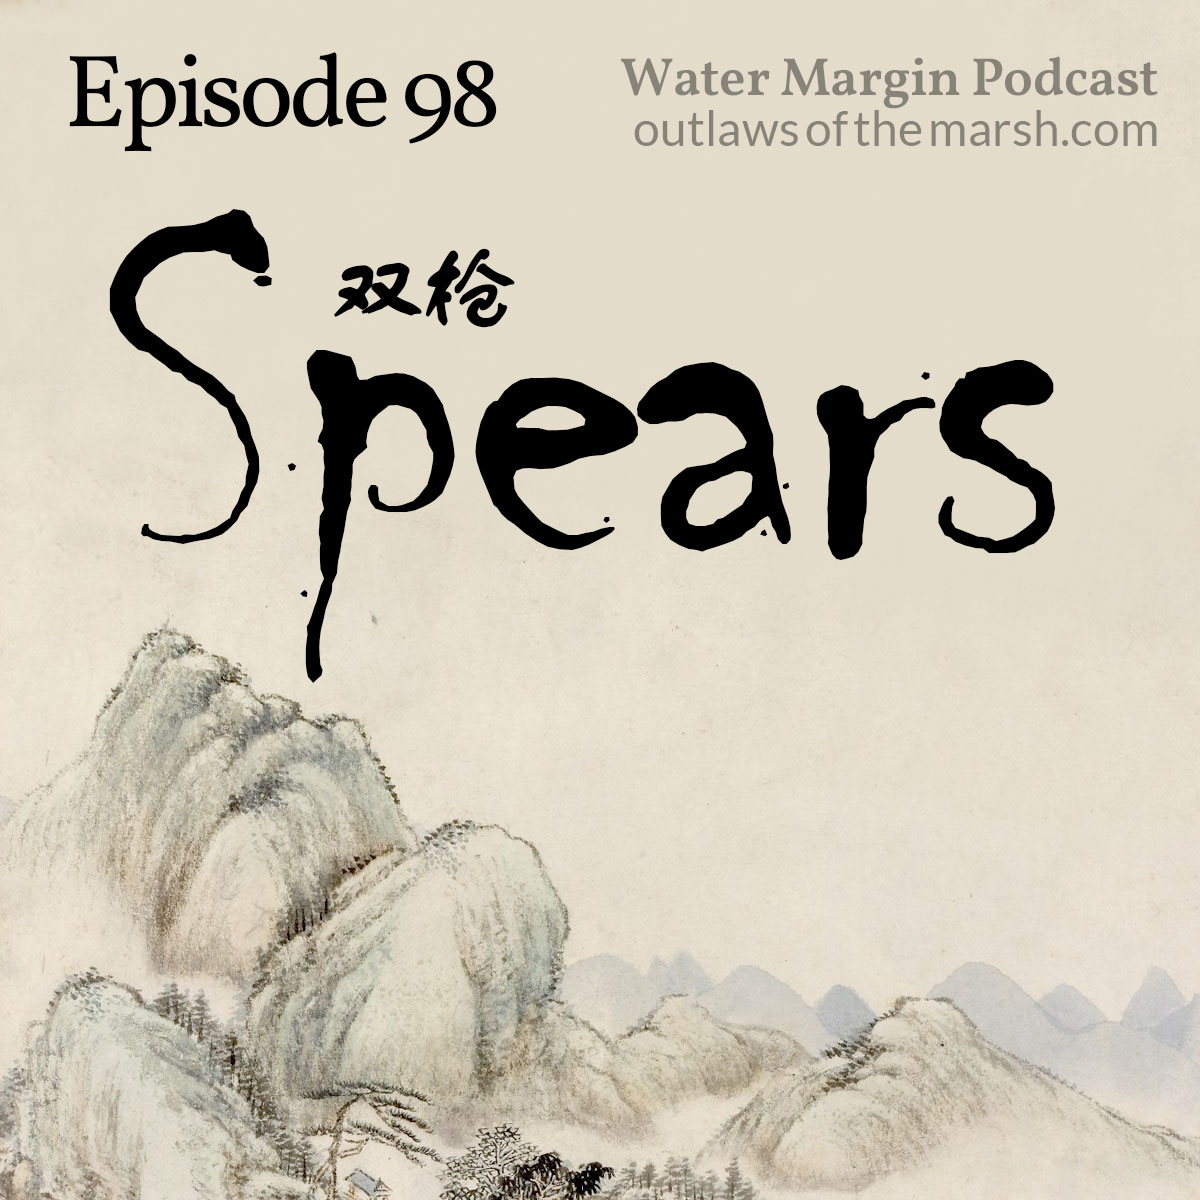 Water Margin Podcast: Episode 098